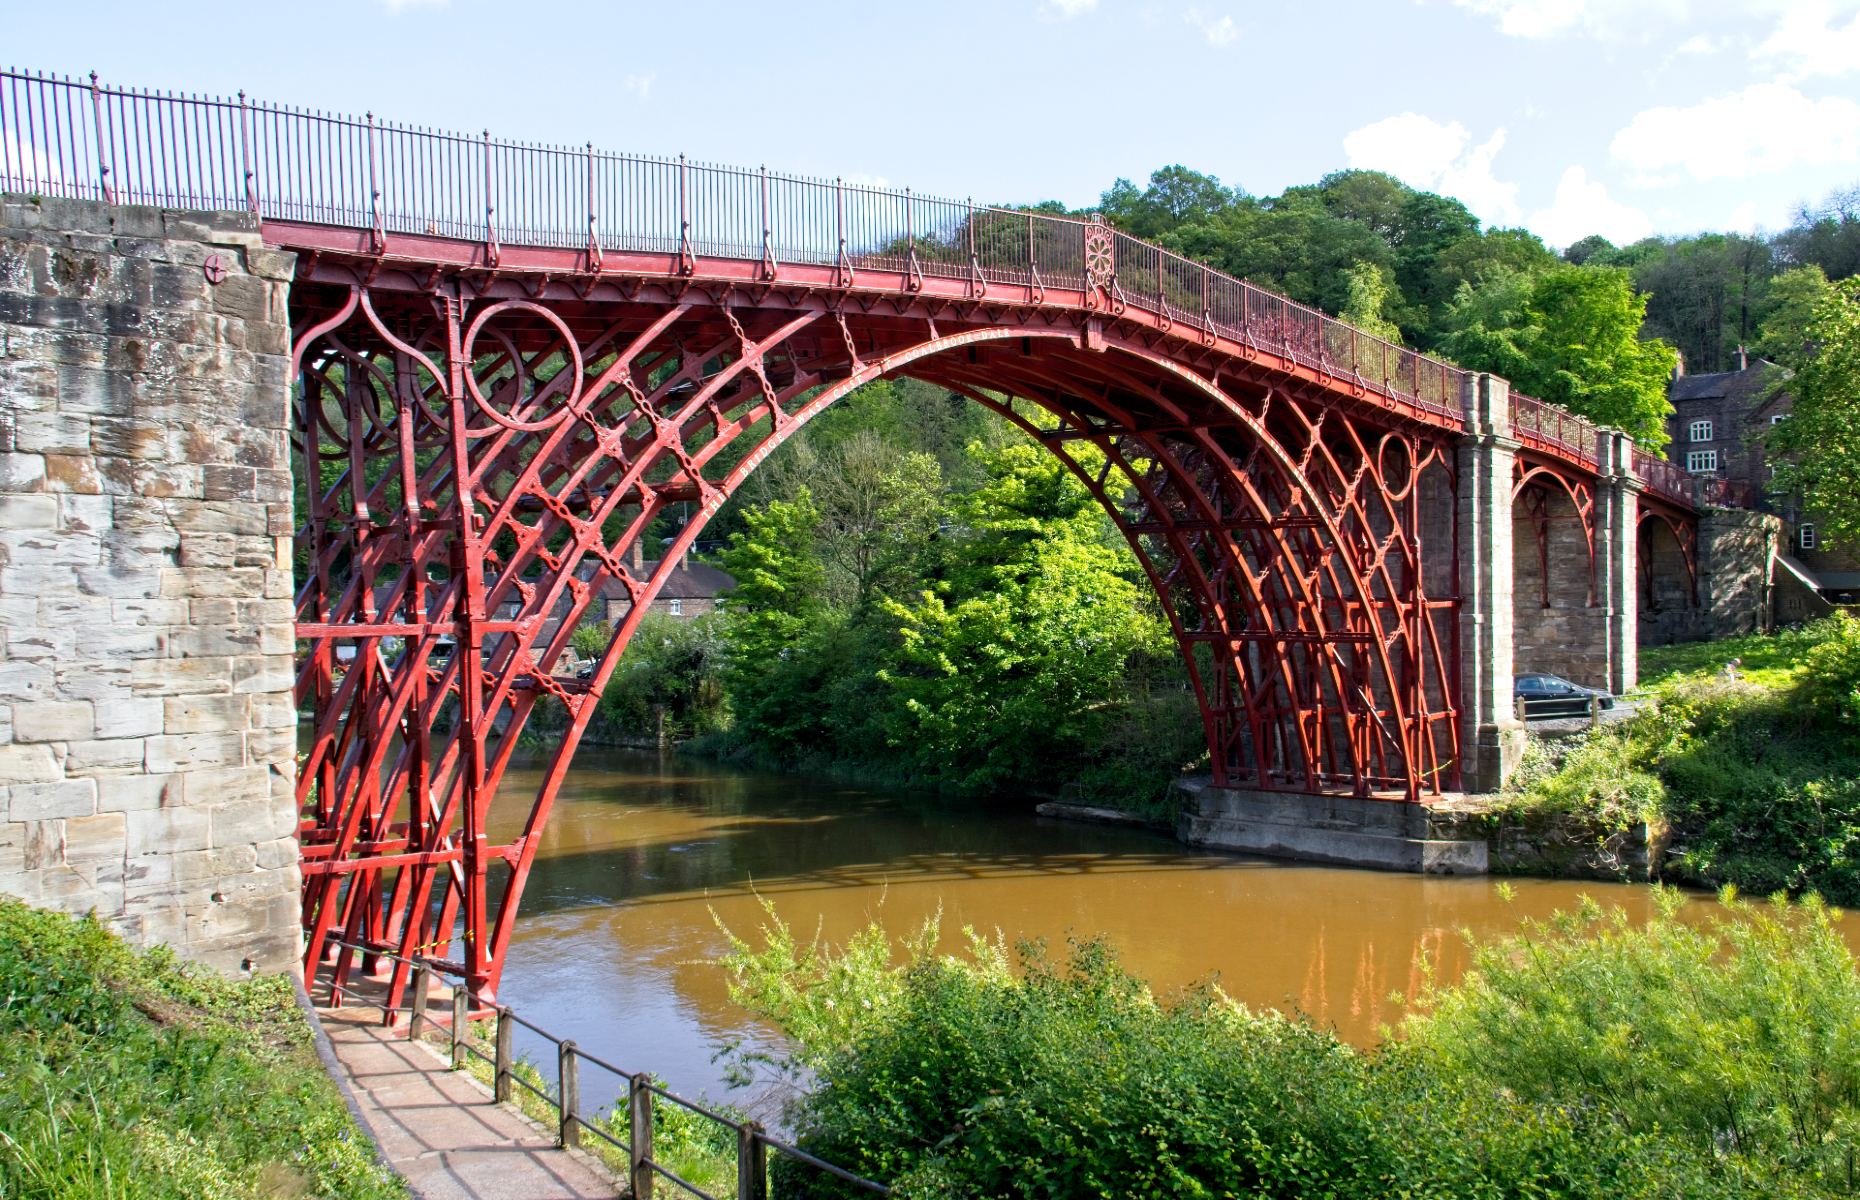 Iron bridge over the River Severn (Image: Bewickswan/Shutterstock)